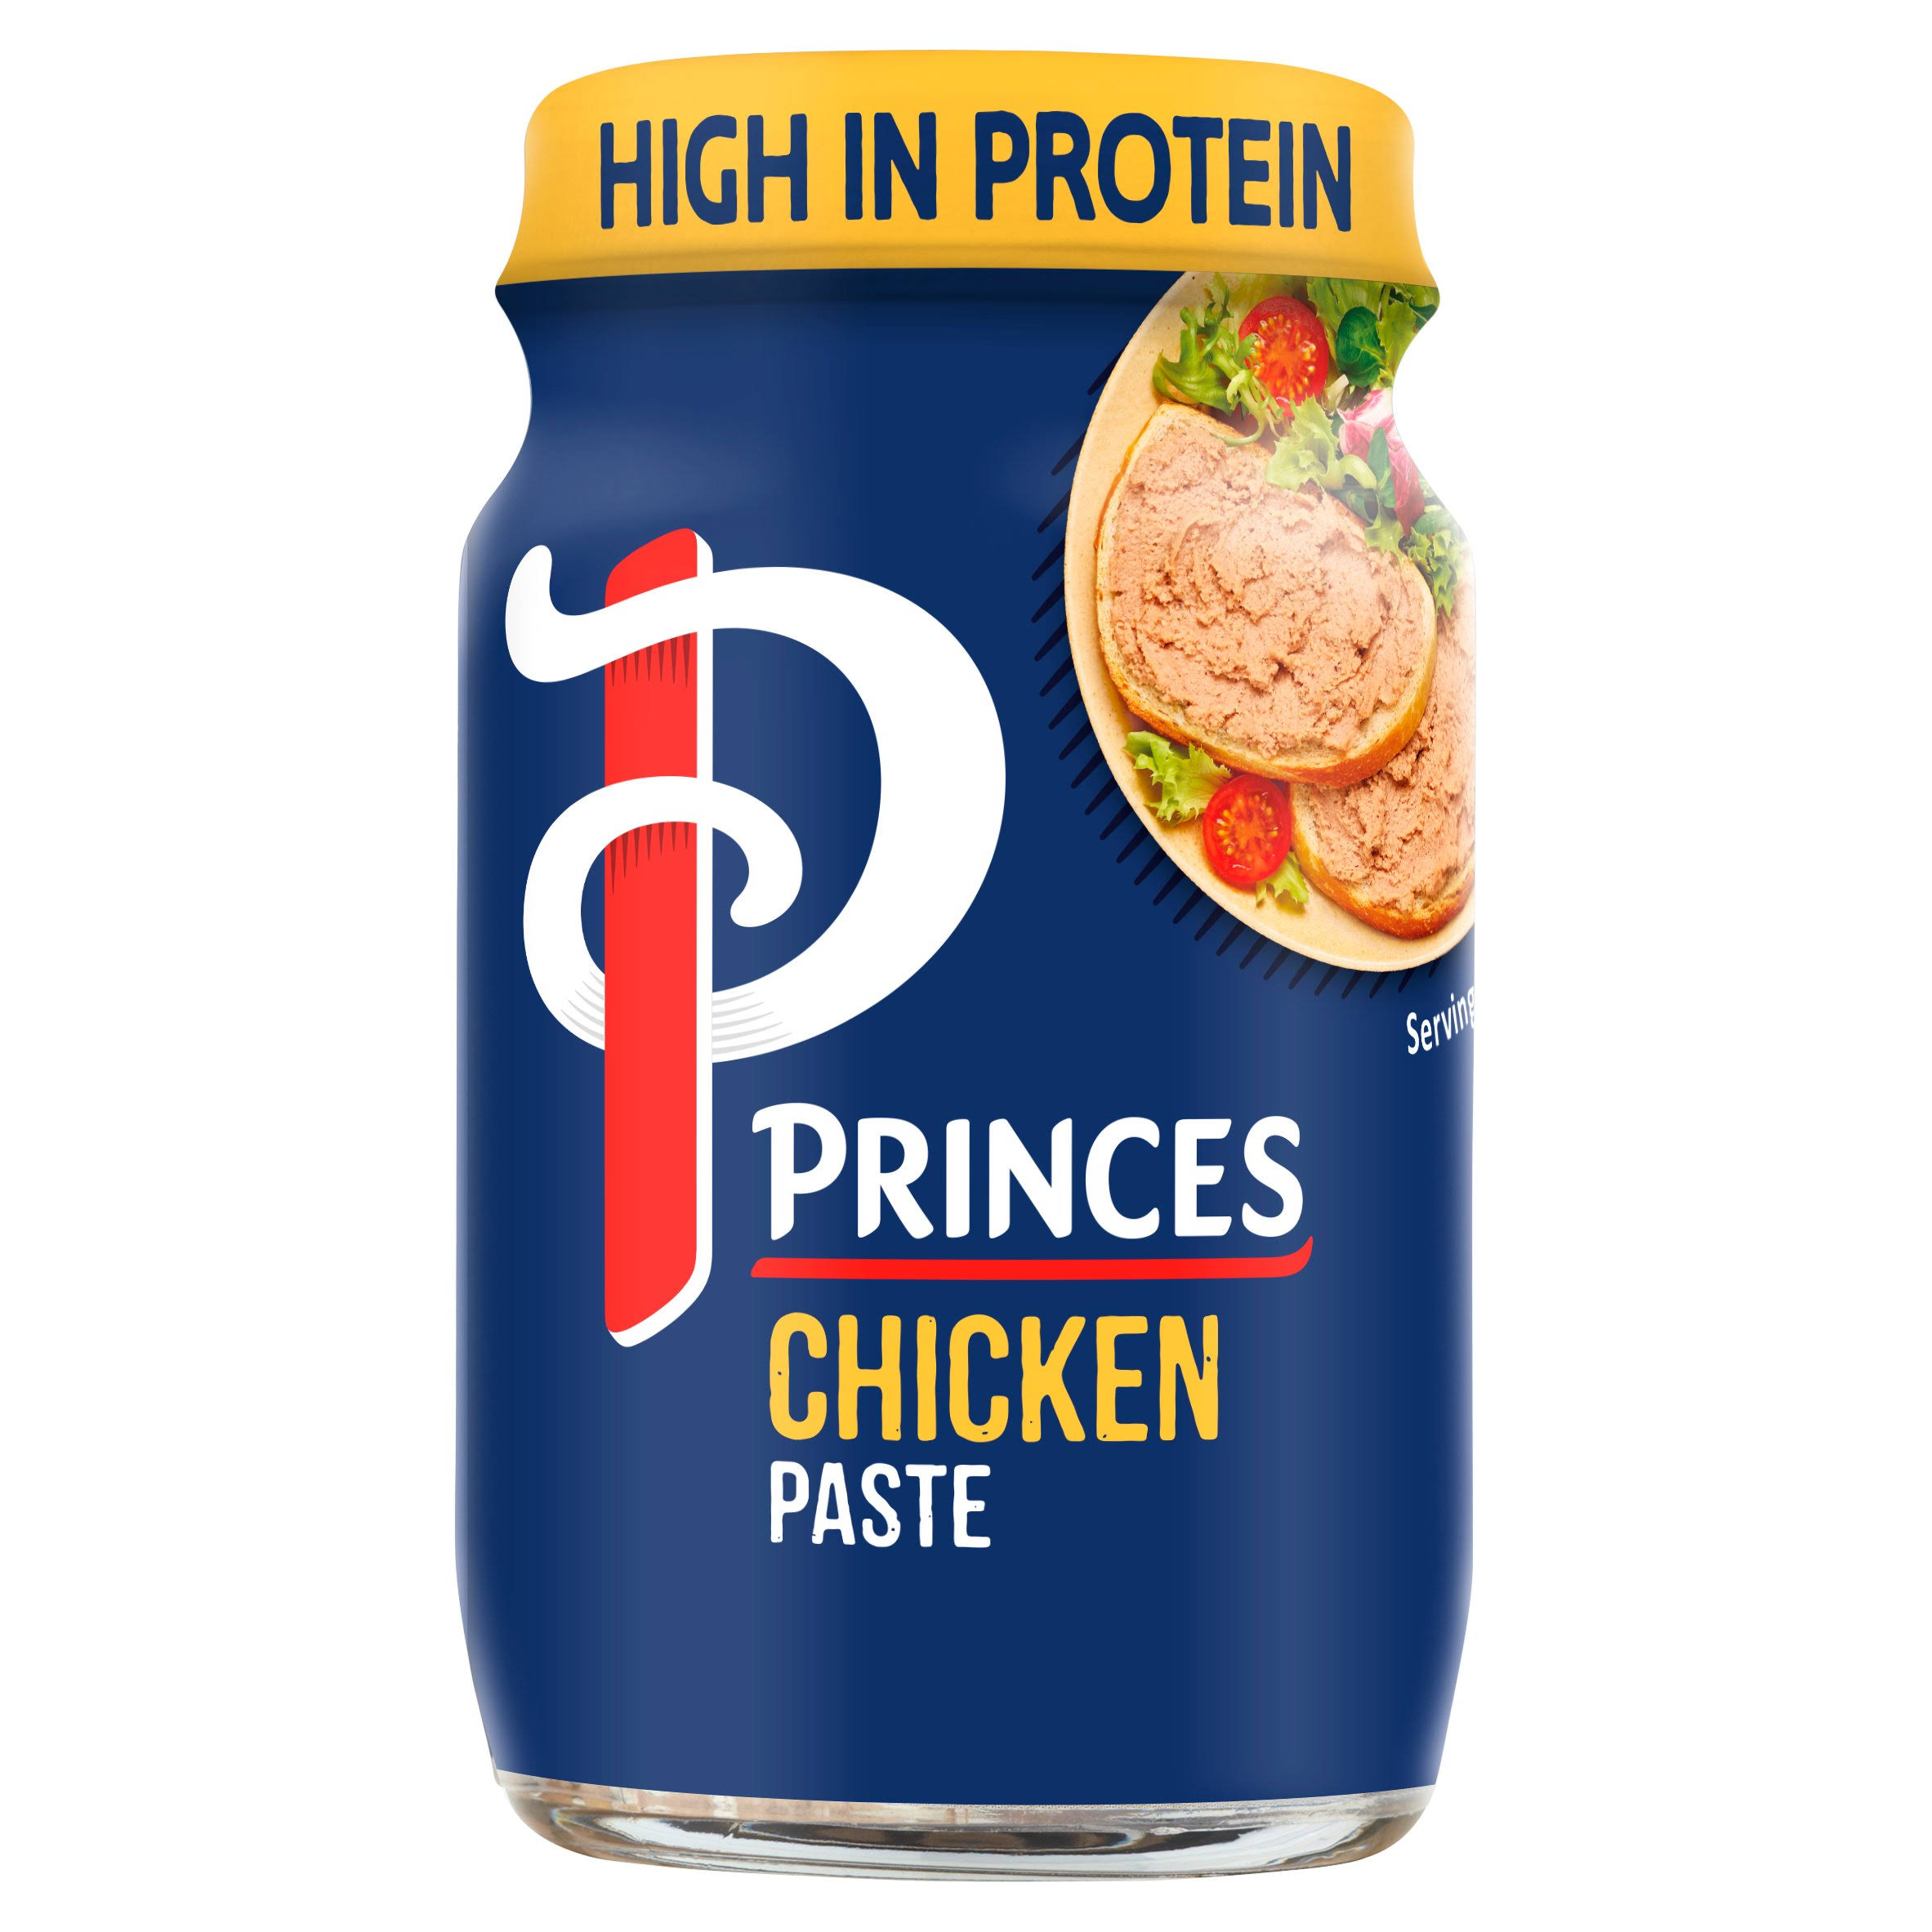 Princes Chicken Paste Delivered to Australia